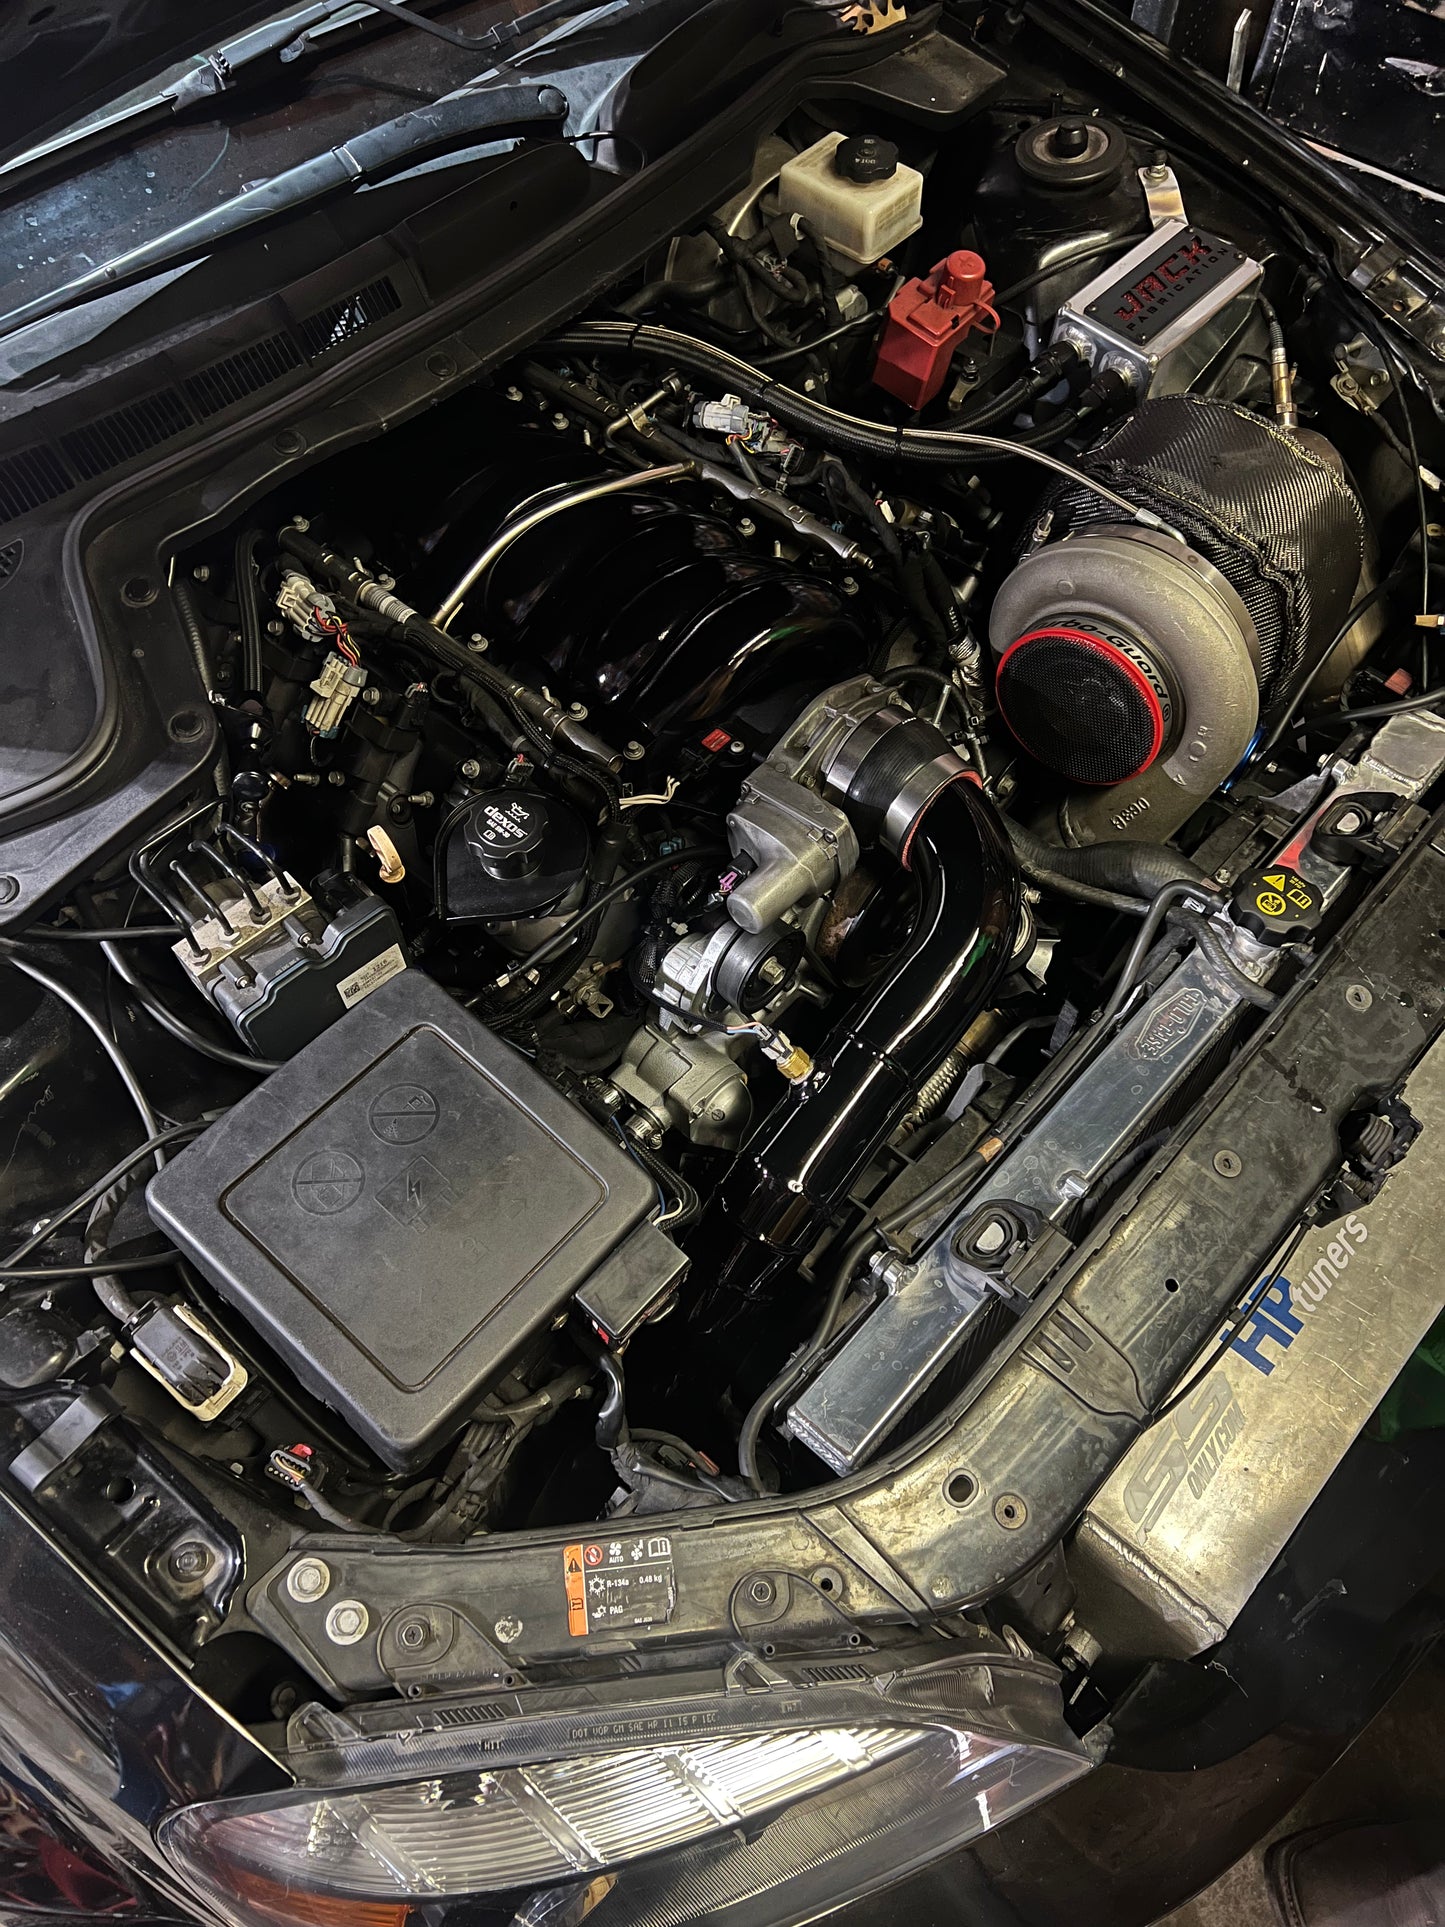 Caprice PPV / G8 / SS / Holden Turbo Manifold/Crossover kit